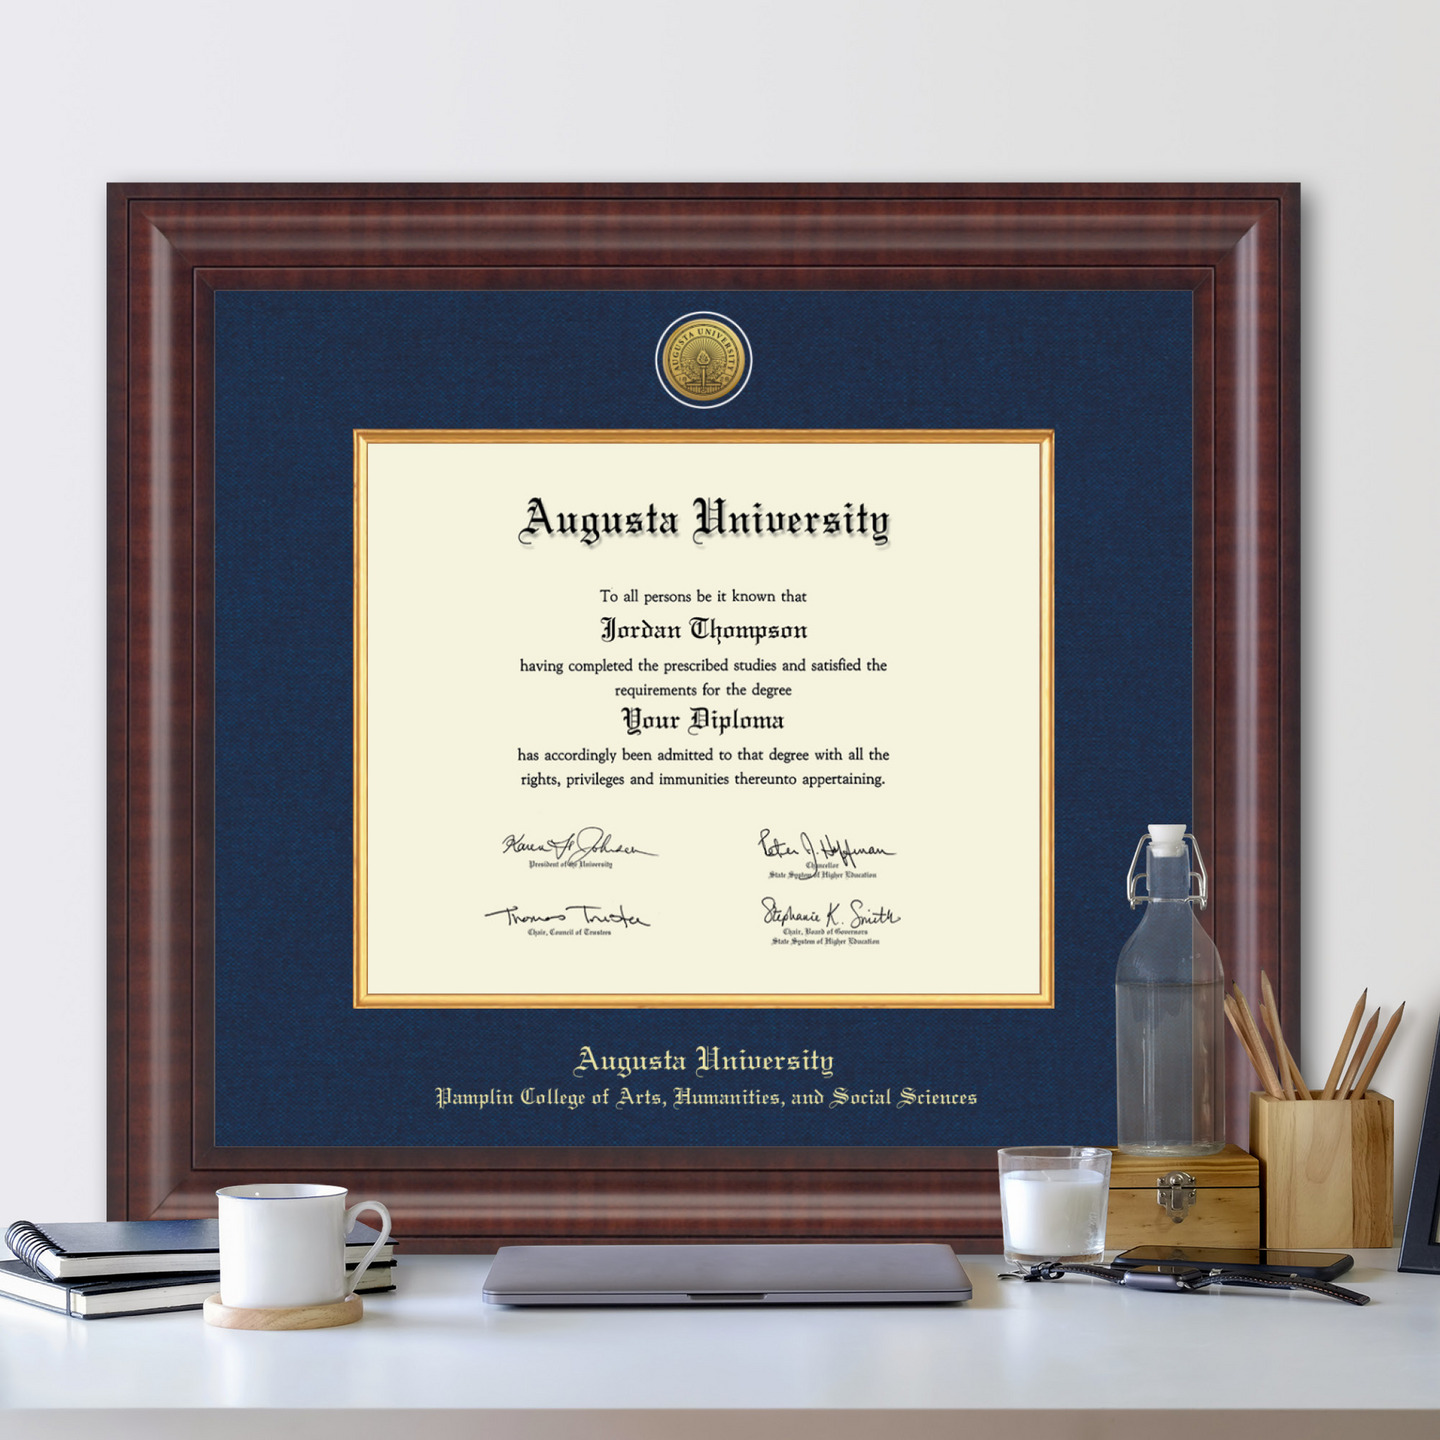 Augusta University Presidential Gold Engraved Diploma Frame in Premier Item 278535ARH from